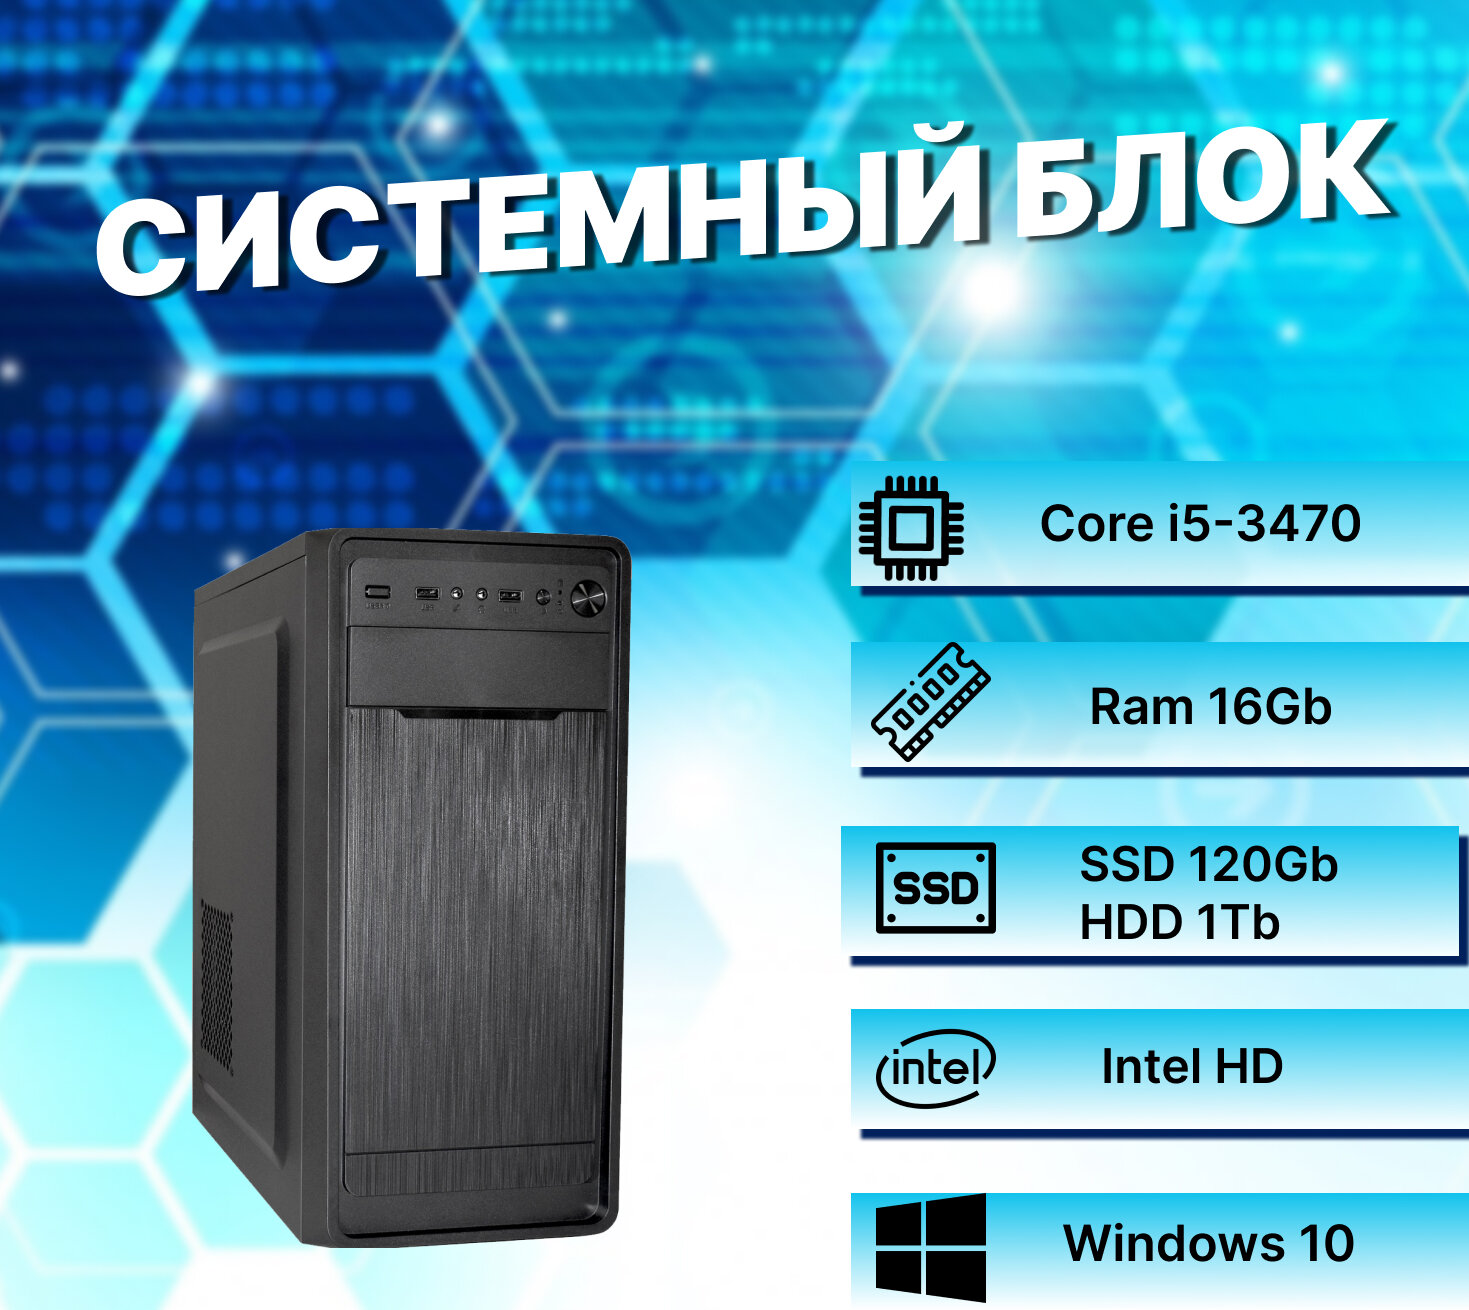 Системный блок Intel Core I5-3470 (3.2ГГц)/ RAM 16Gb/ SSD 120Gb/ HDD 1Tb/ Intel HD/ Windows 10 Pro